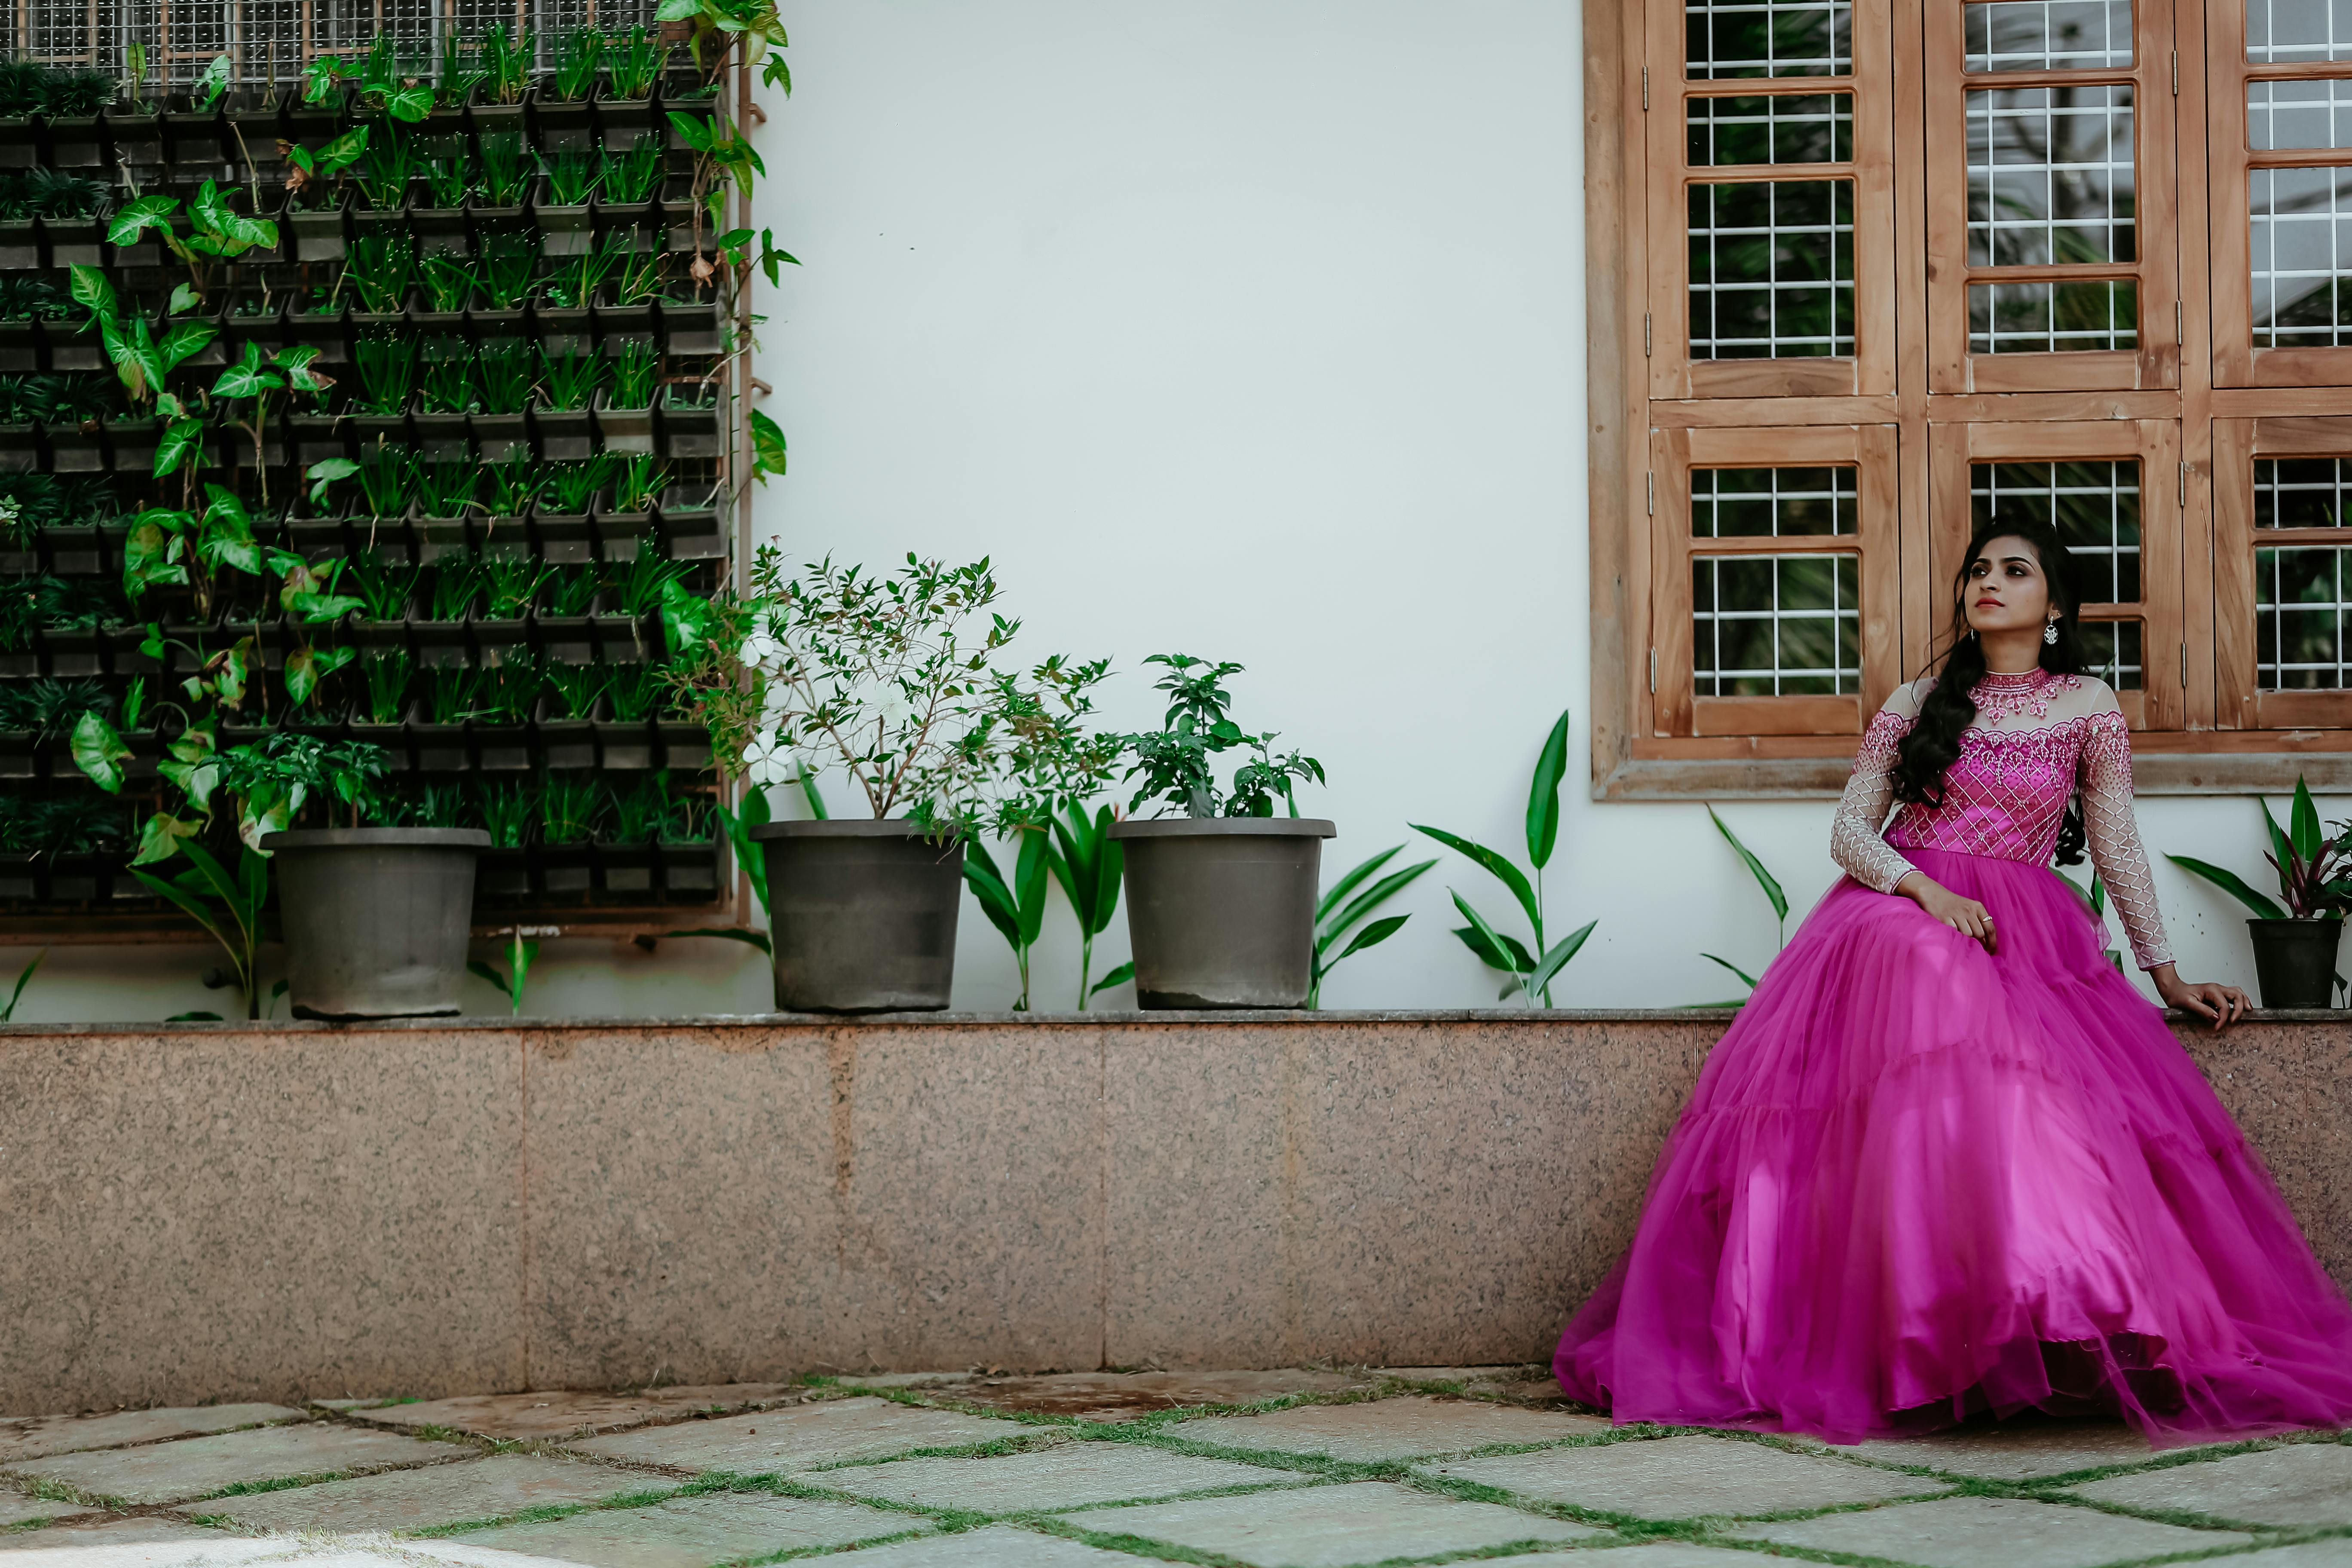 Glamorous Dresses For Your Next Photoshoot From Korinnart | Beautiful  photoshoot ideas, Wedding photoshoot poses, Couple photoshoot poses